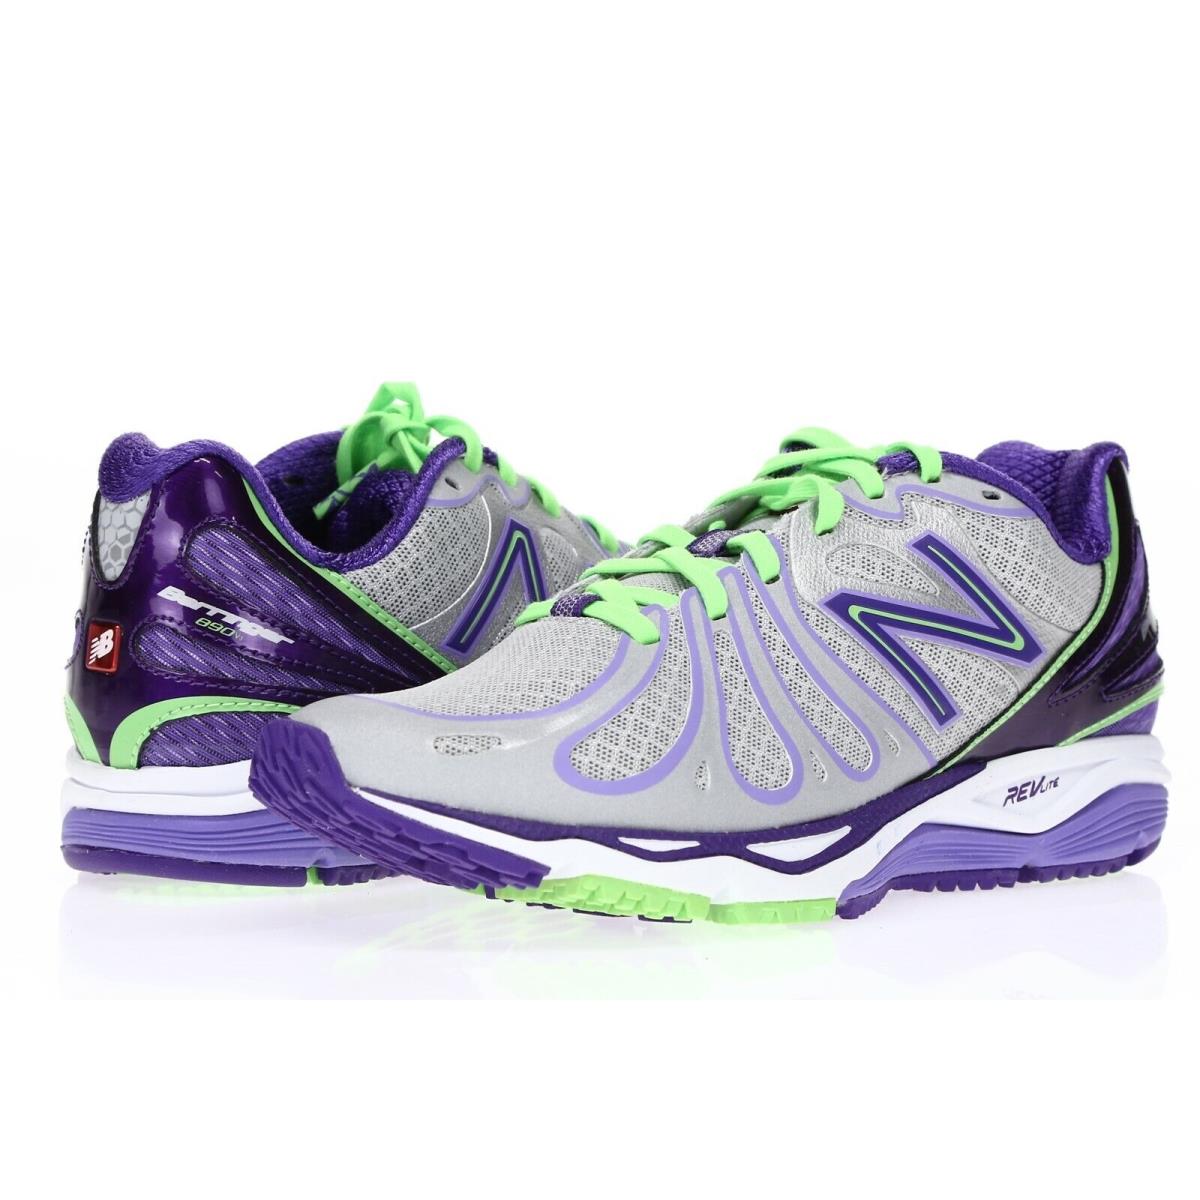 New Balance Womens `890v3` Gray Purple Running Sneakers Sz 5 B